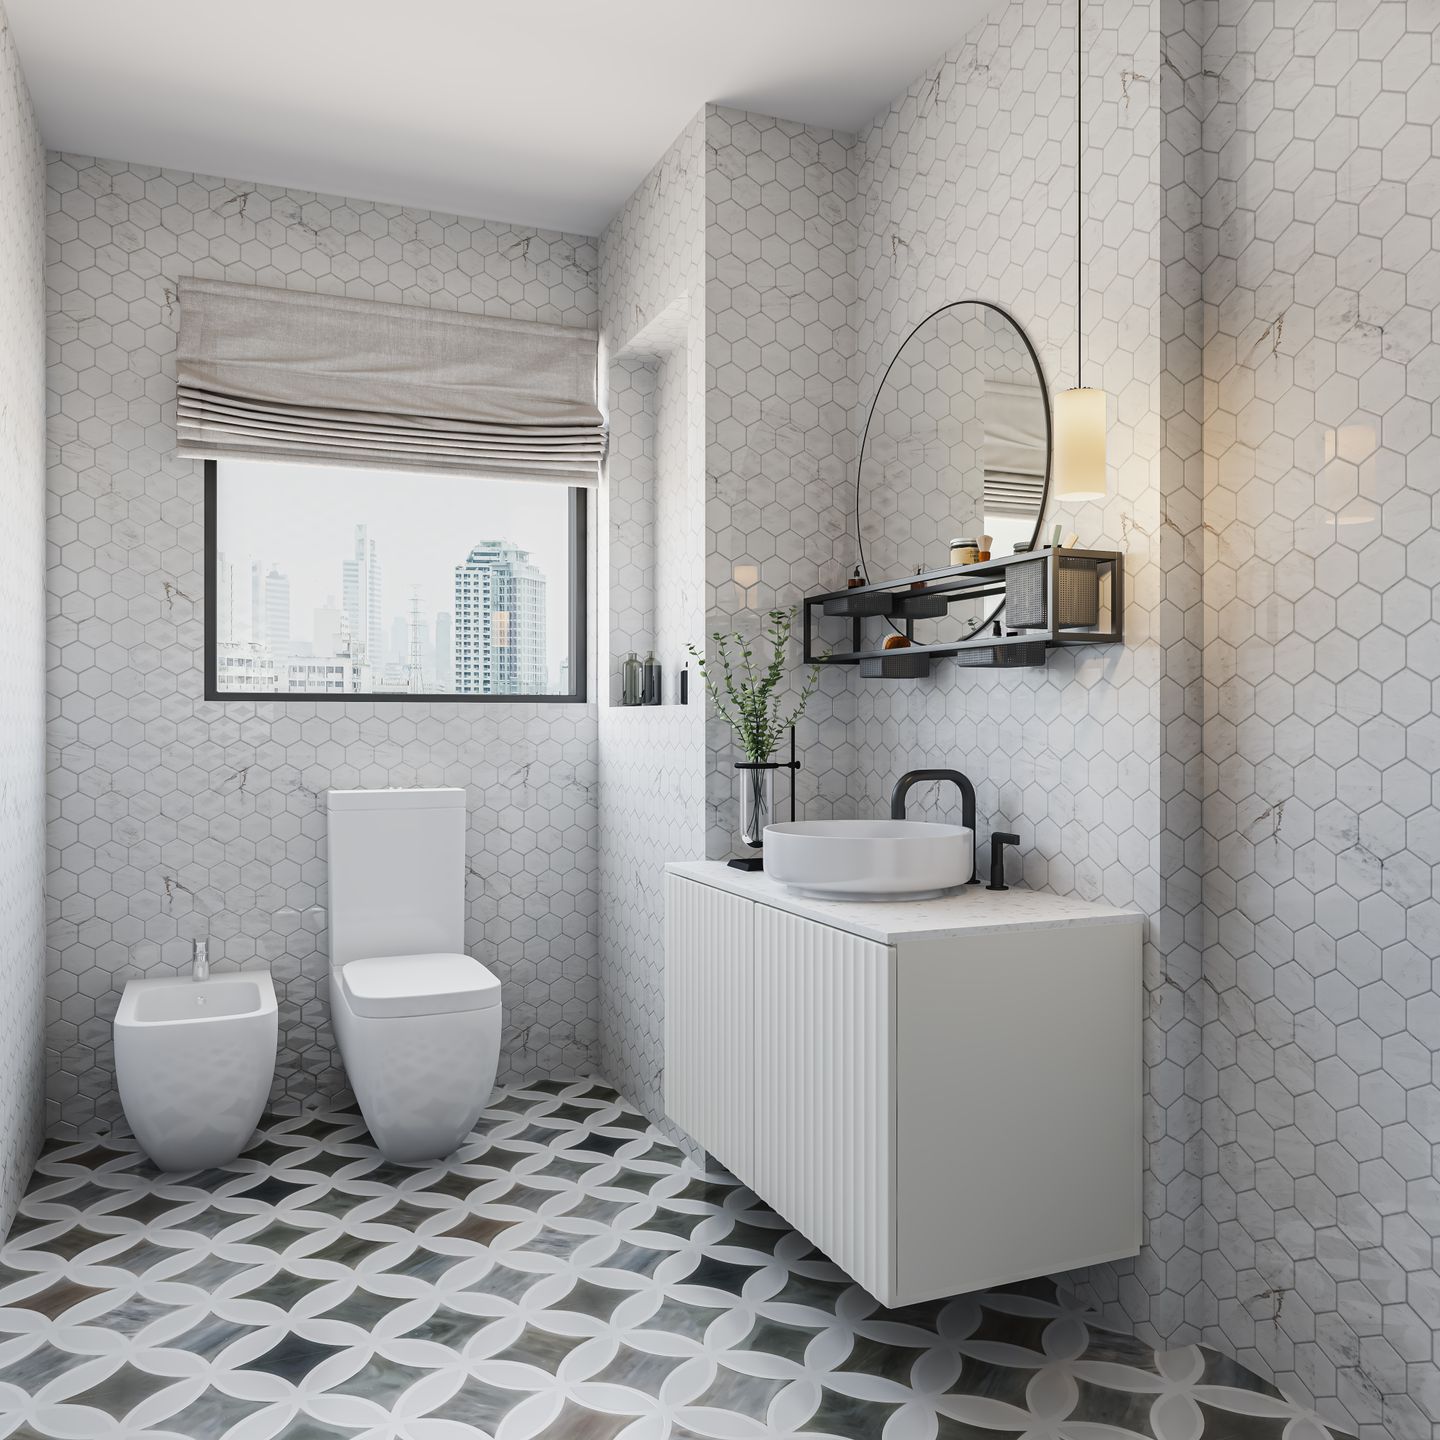 Budget-Friendly Bathroom Design With Minimal Glam - Livspace